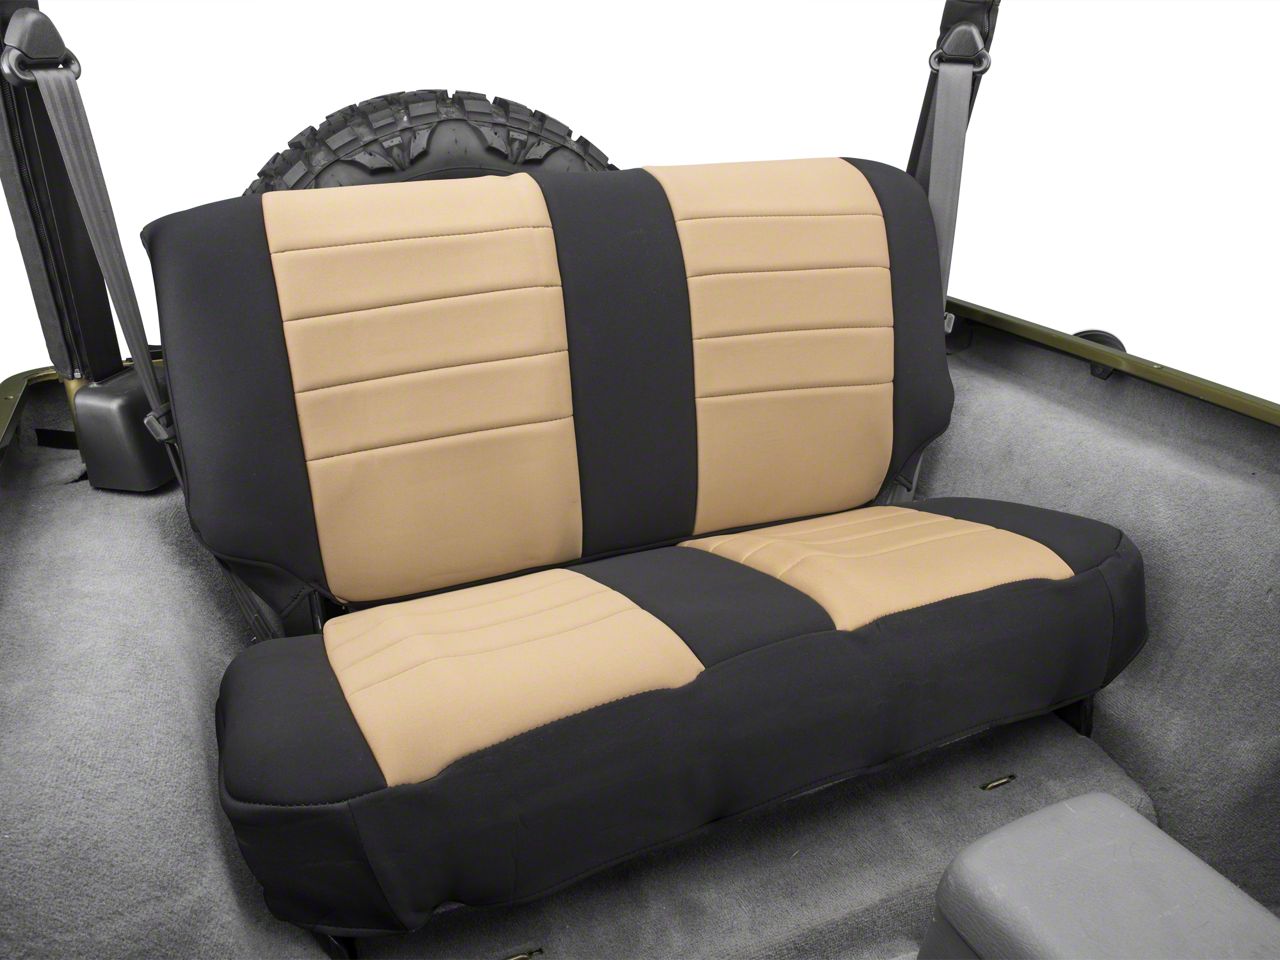 Rugged Ridge Jeep Wrangler Neoprene Rear Seat Cover Tan/Black 13261.04  (97-02 Jeep Wrangler TJ)